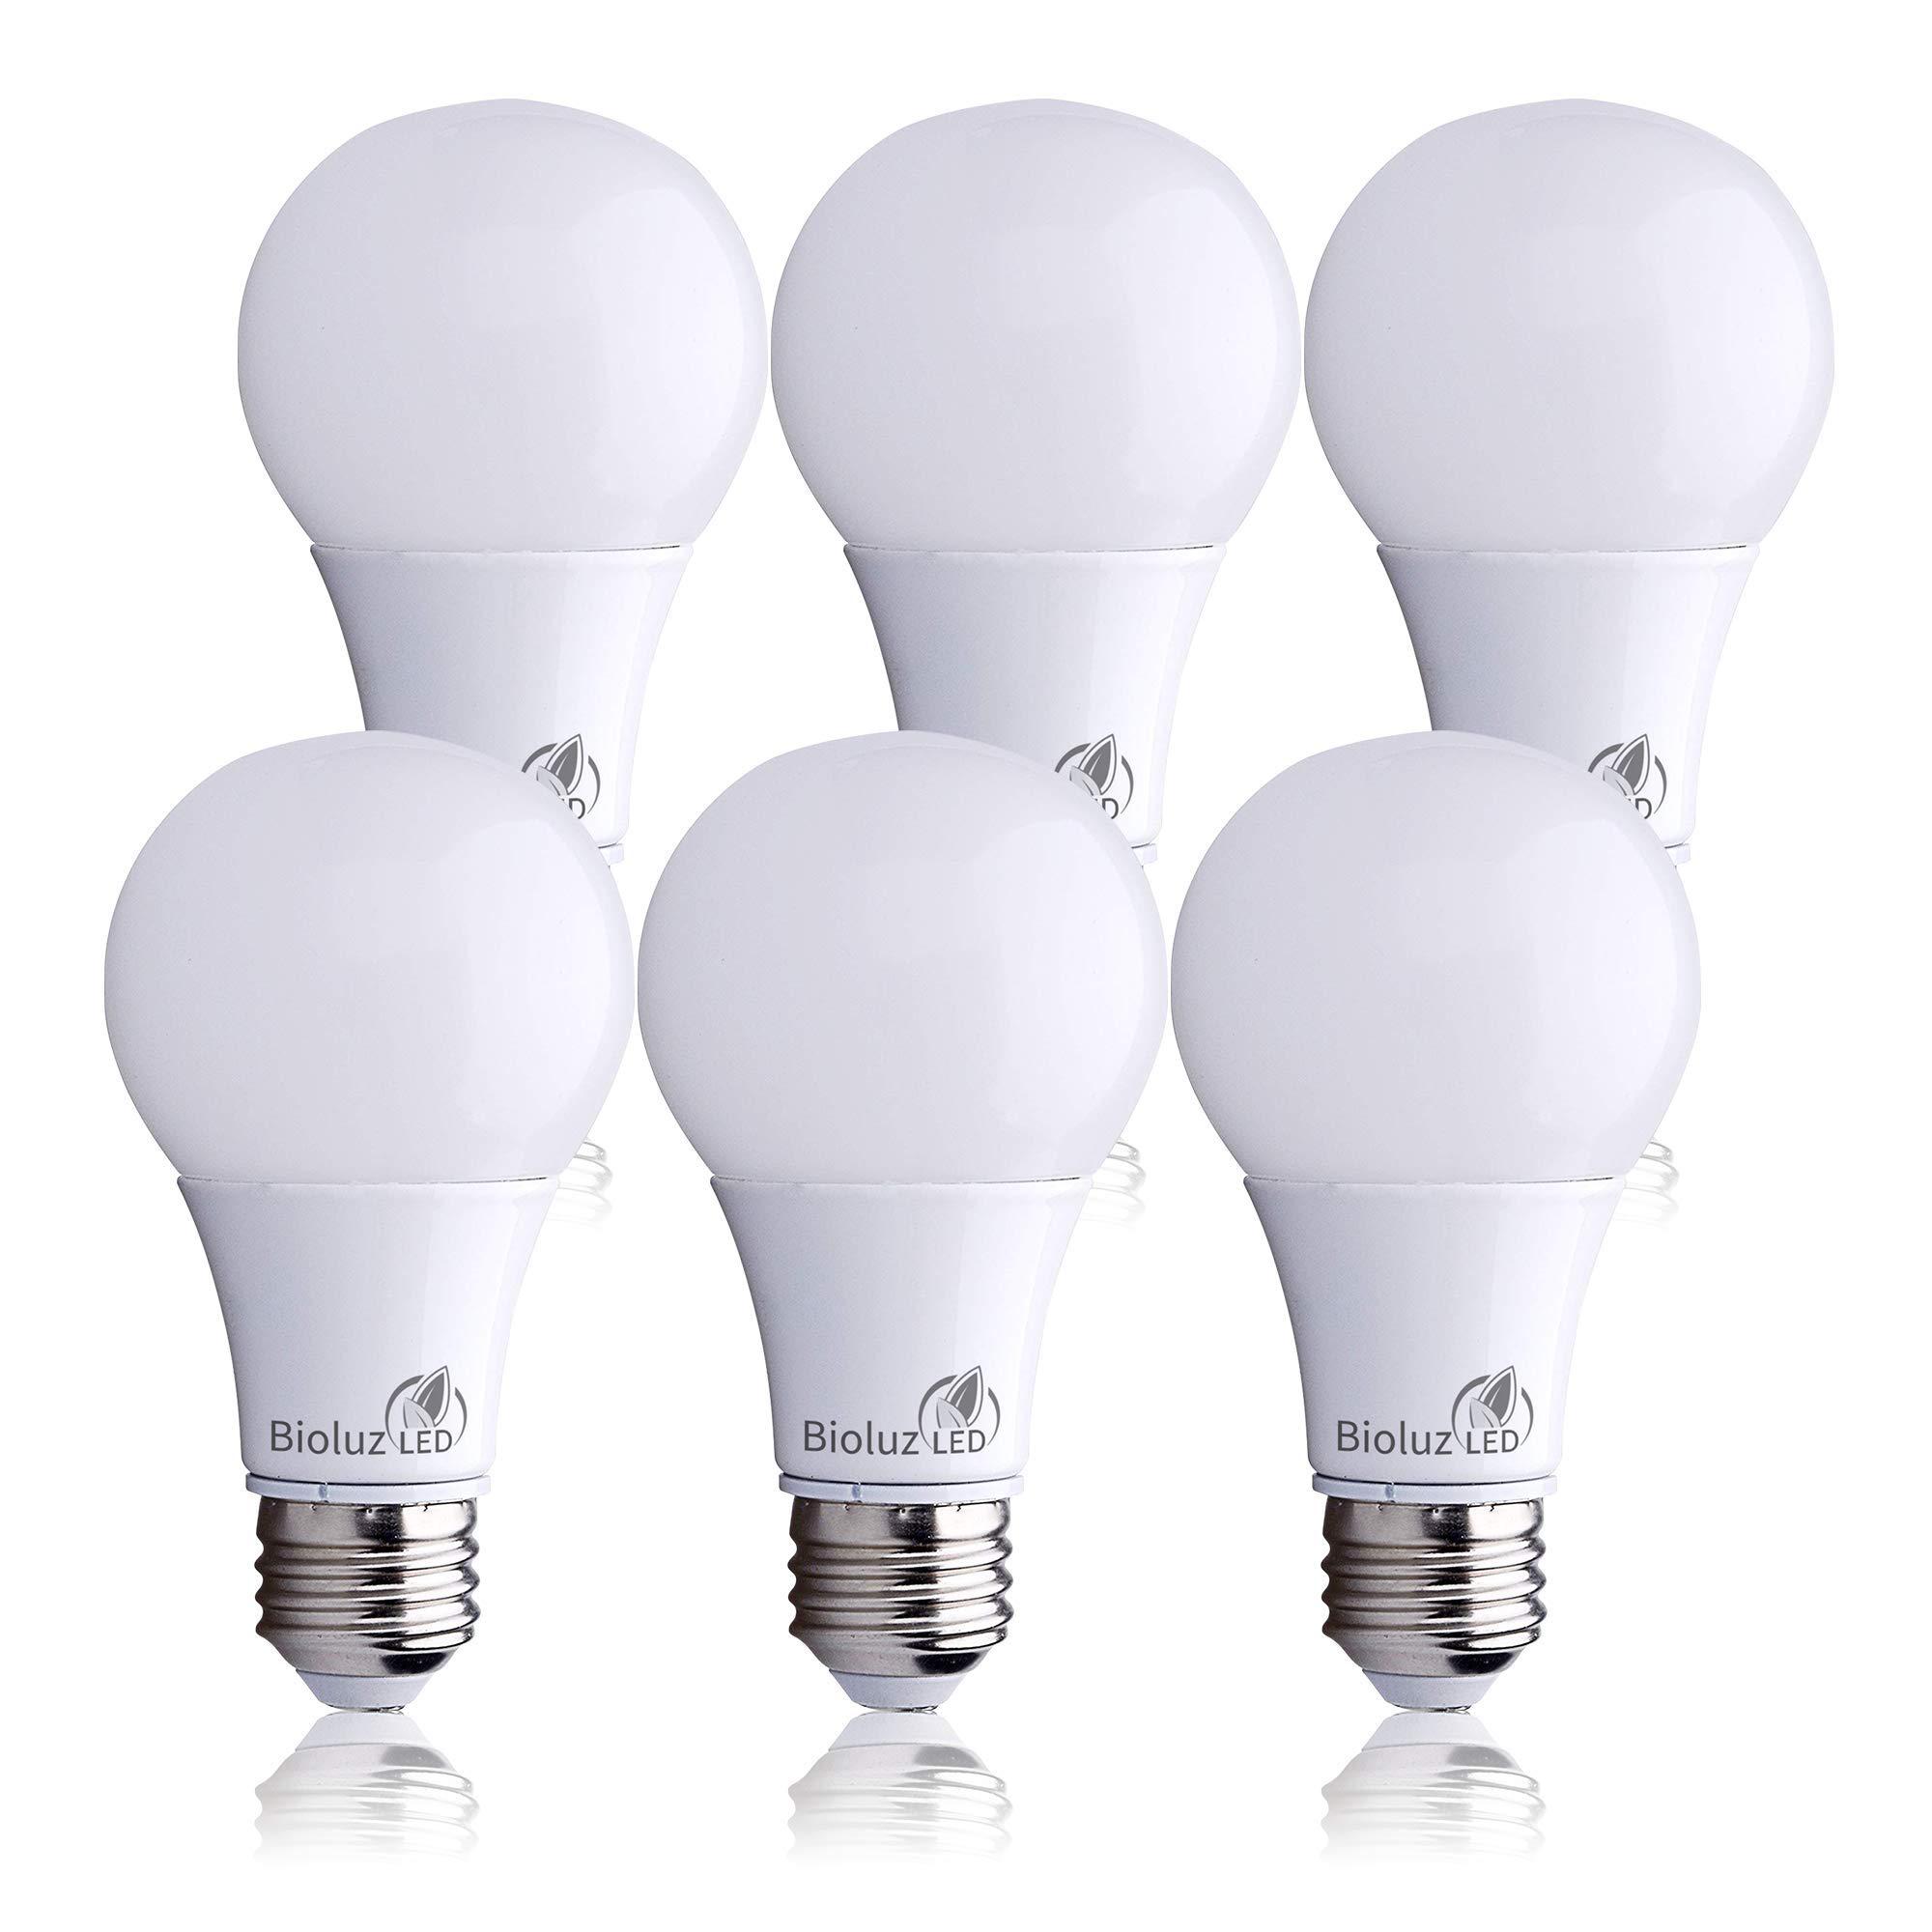 bioluz led 40 watt led light bulbs 4000k cool white 6 watts = 40w non-dimmable a19 led light bulbs 6 pack